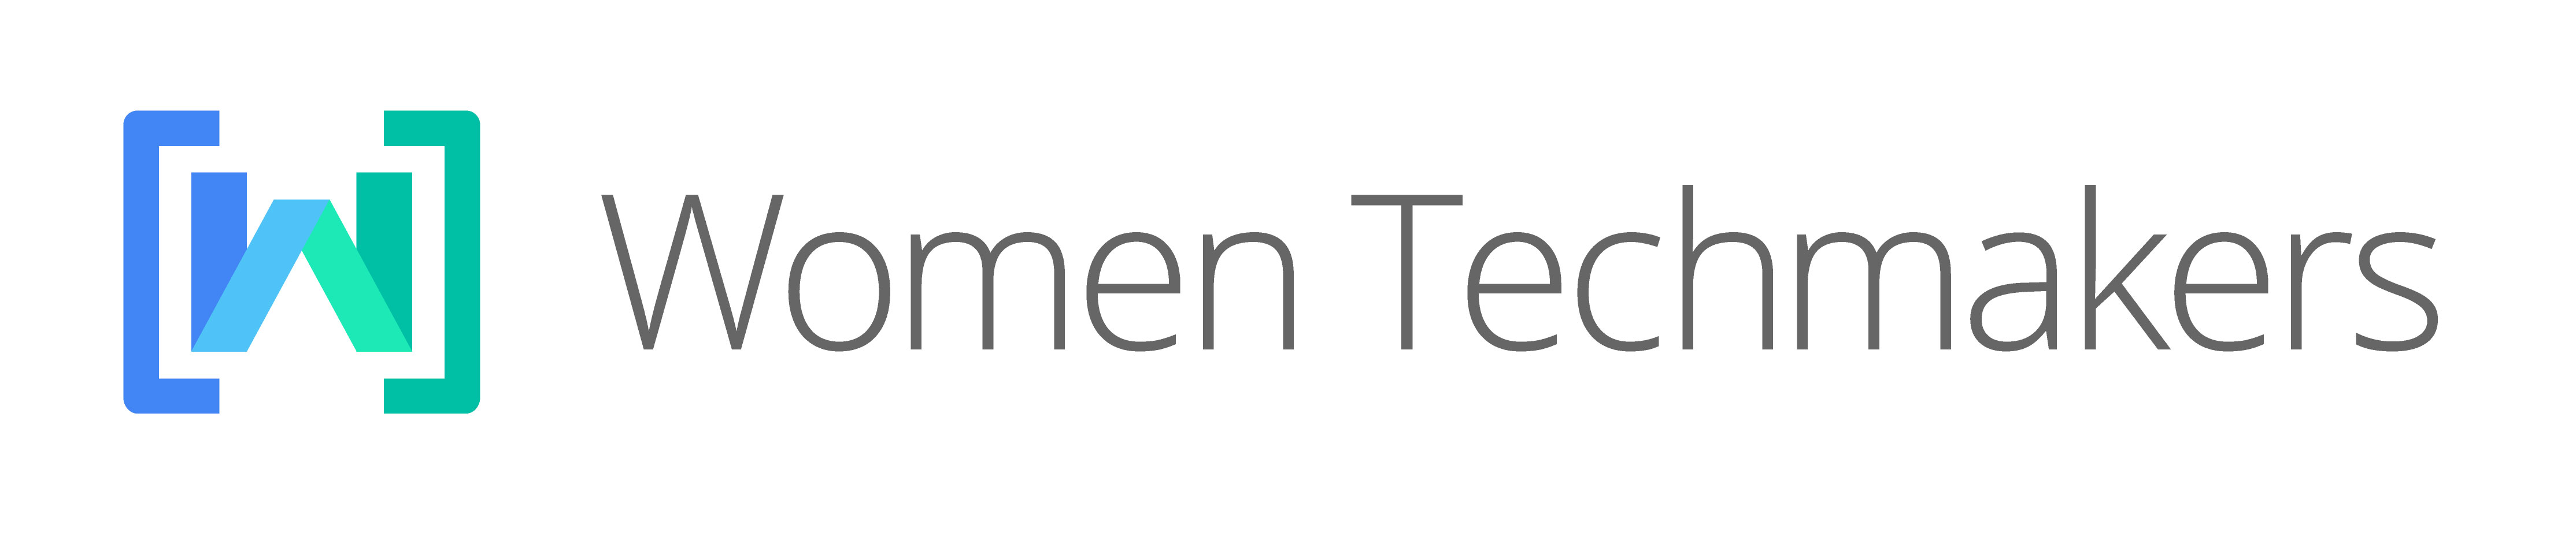 Write/Speak/Code sponsor Google Women Techmakers logo